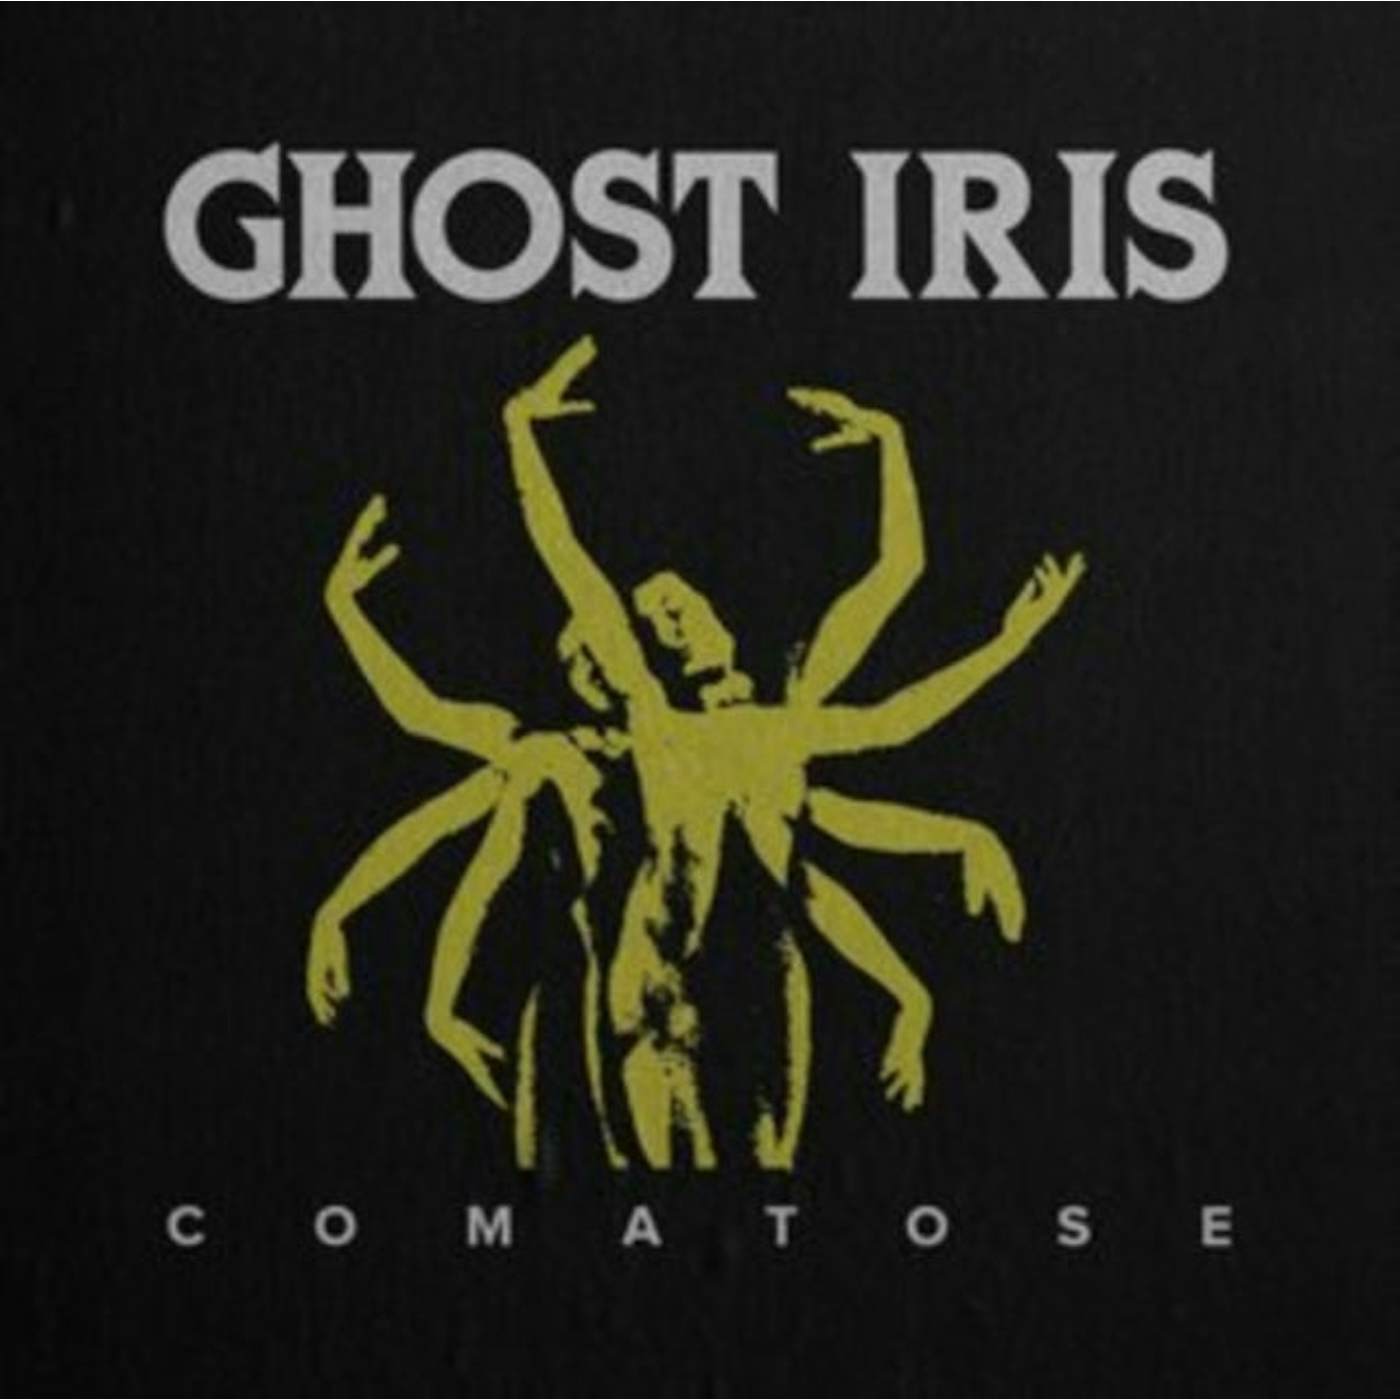 Ghost Iris LP - Comatose (Yellow+White Splattered) (Vinyl)